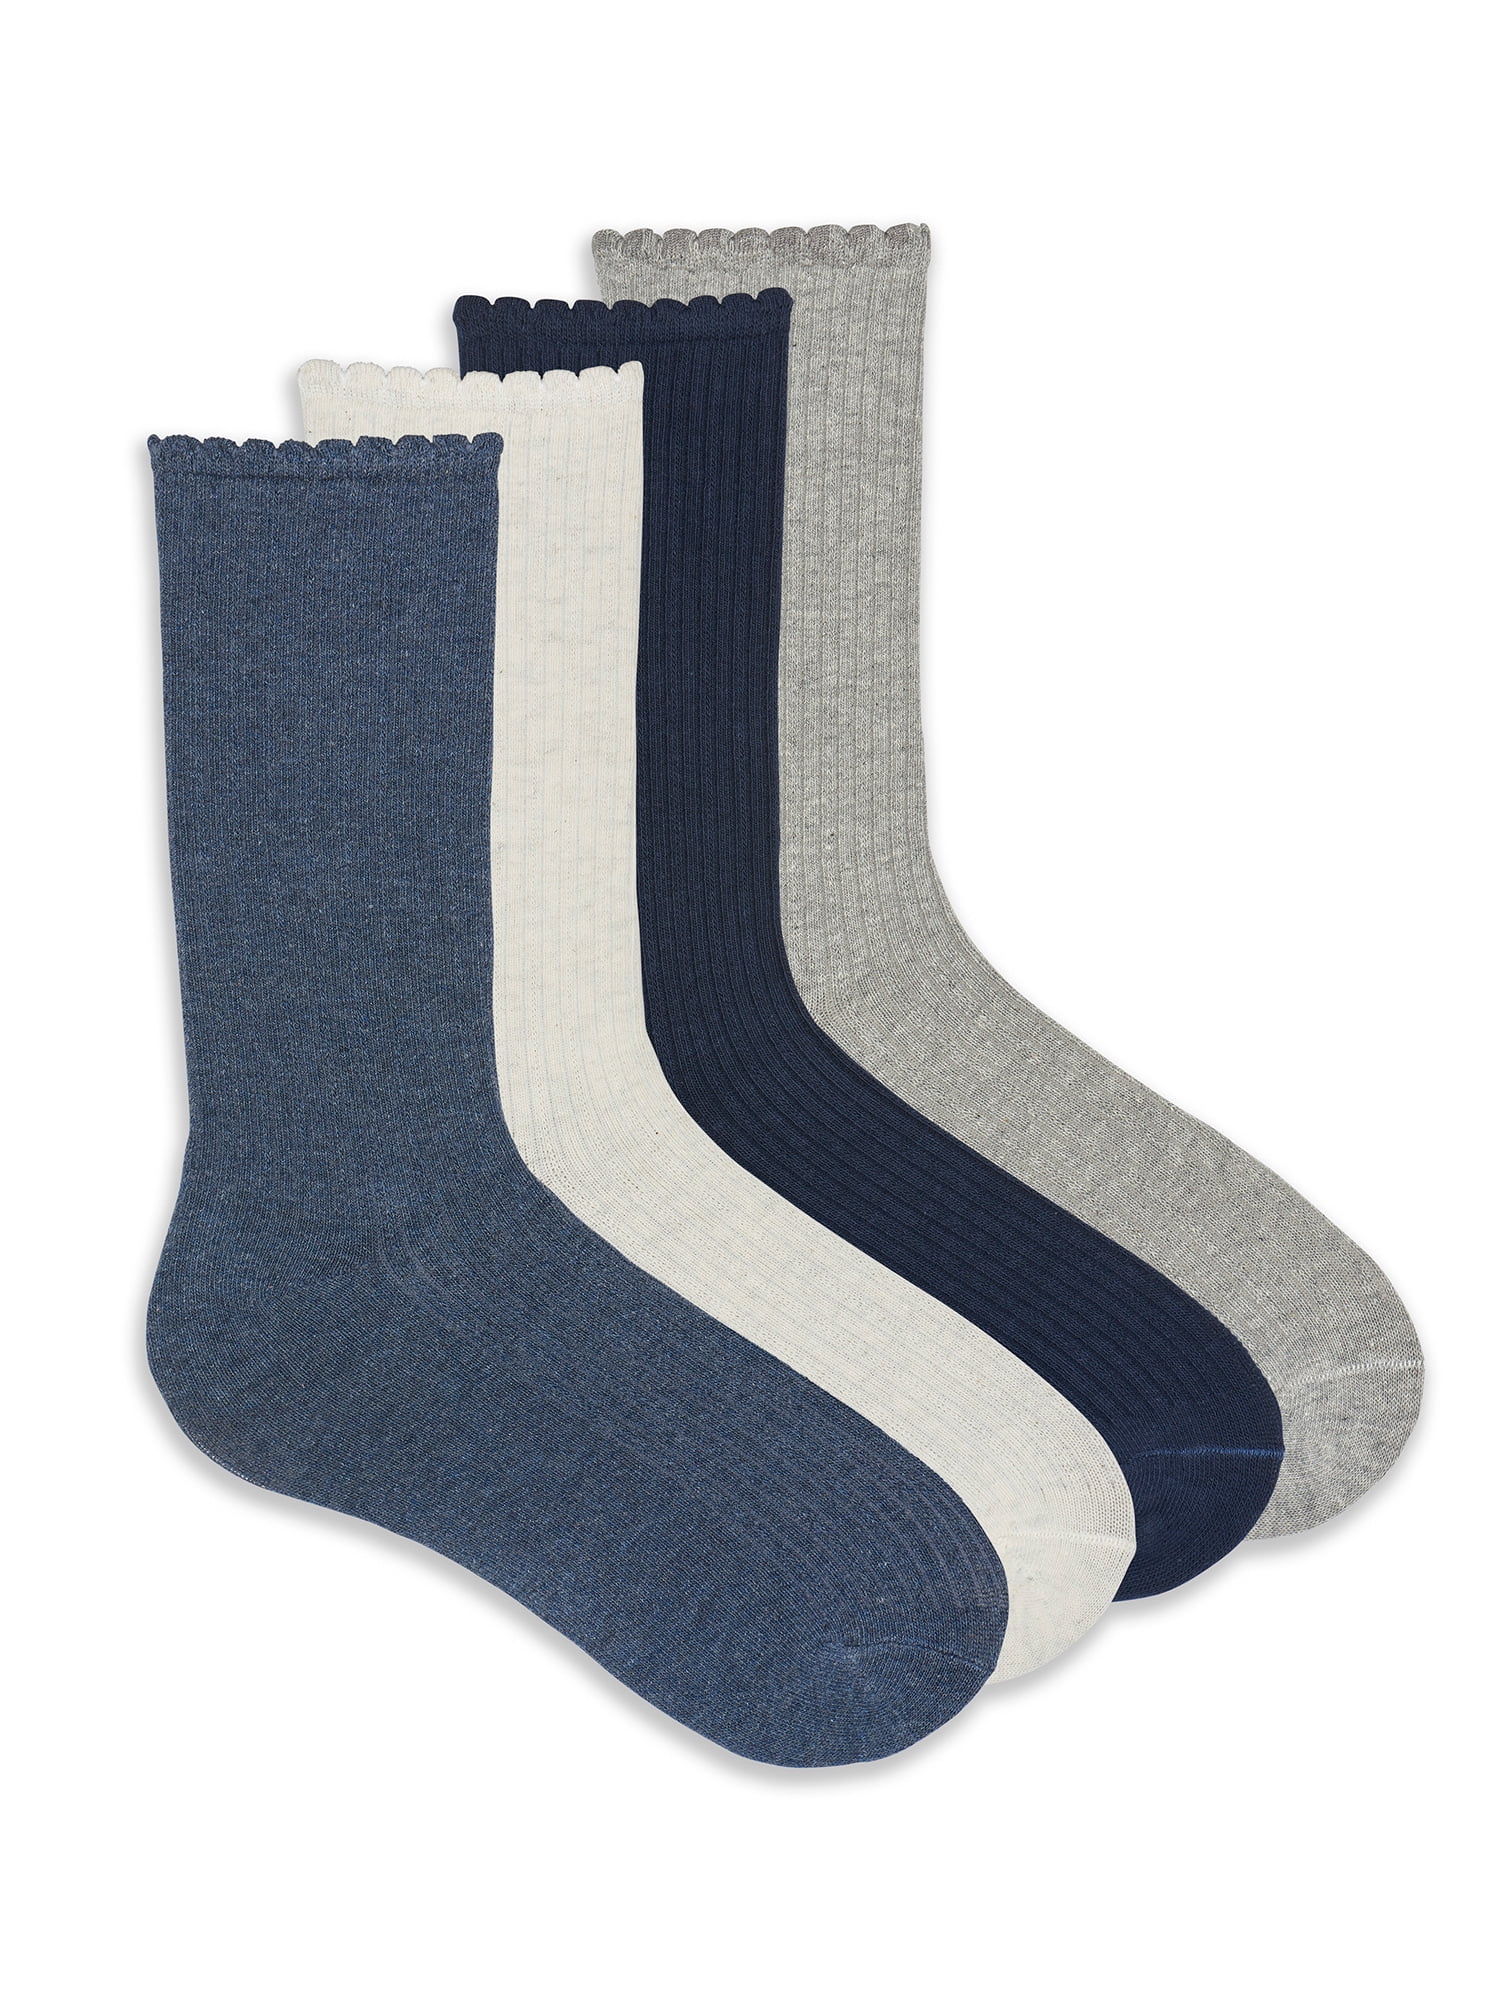 Baby girls Pointelle cotton socks with flat toe seam